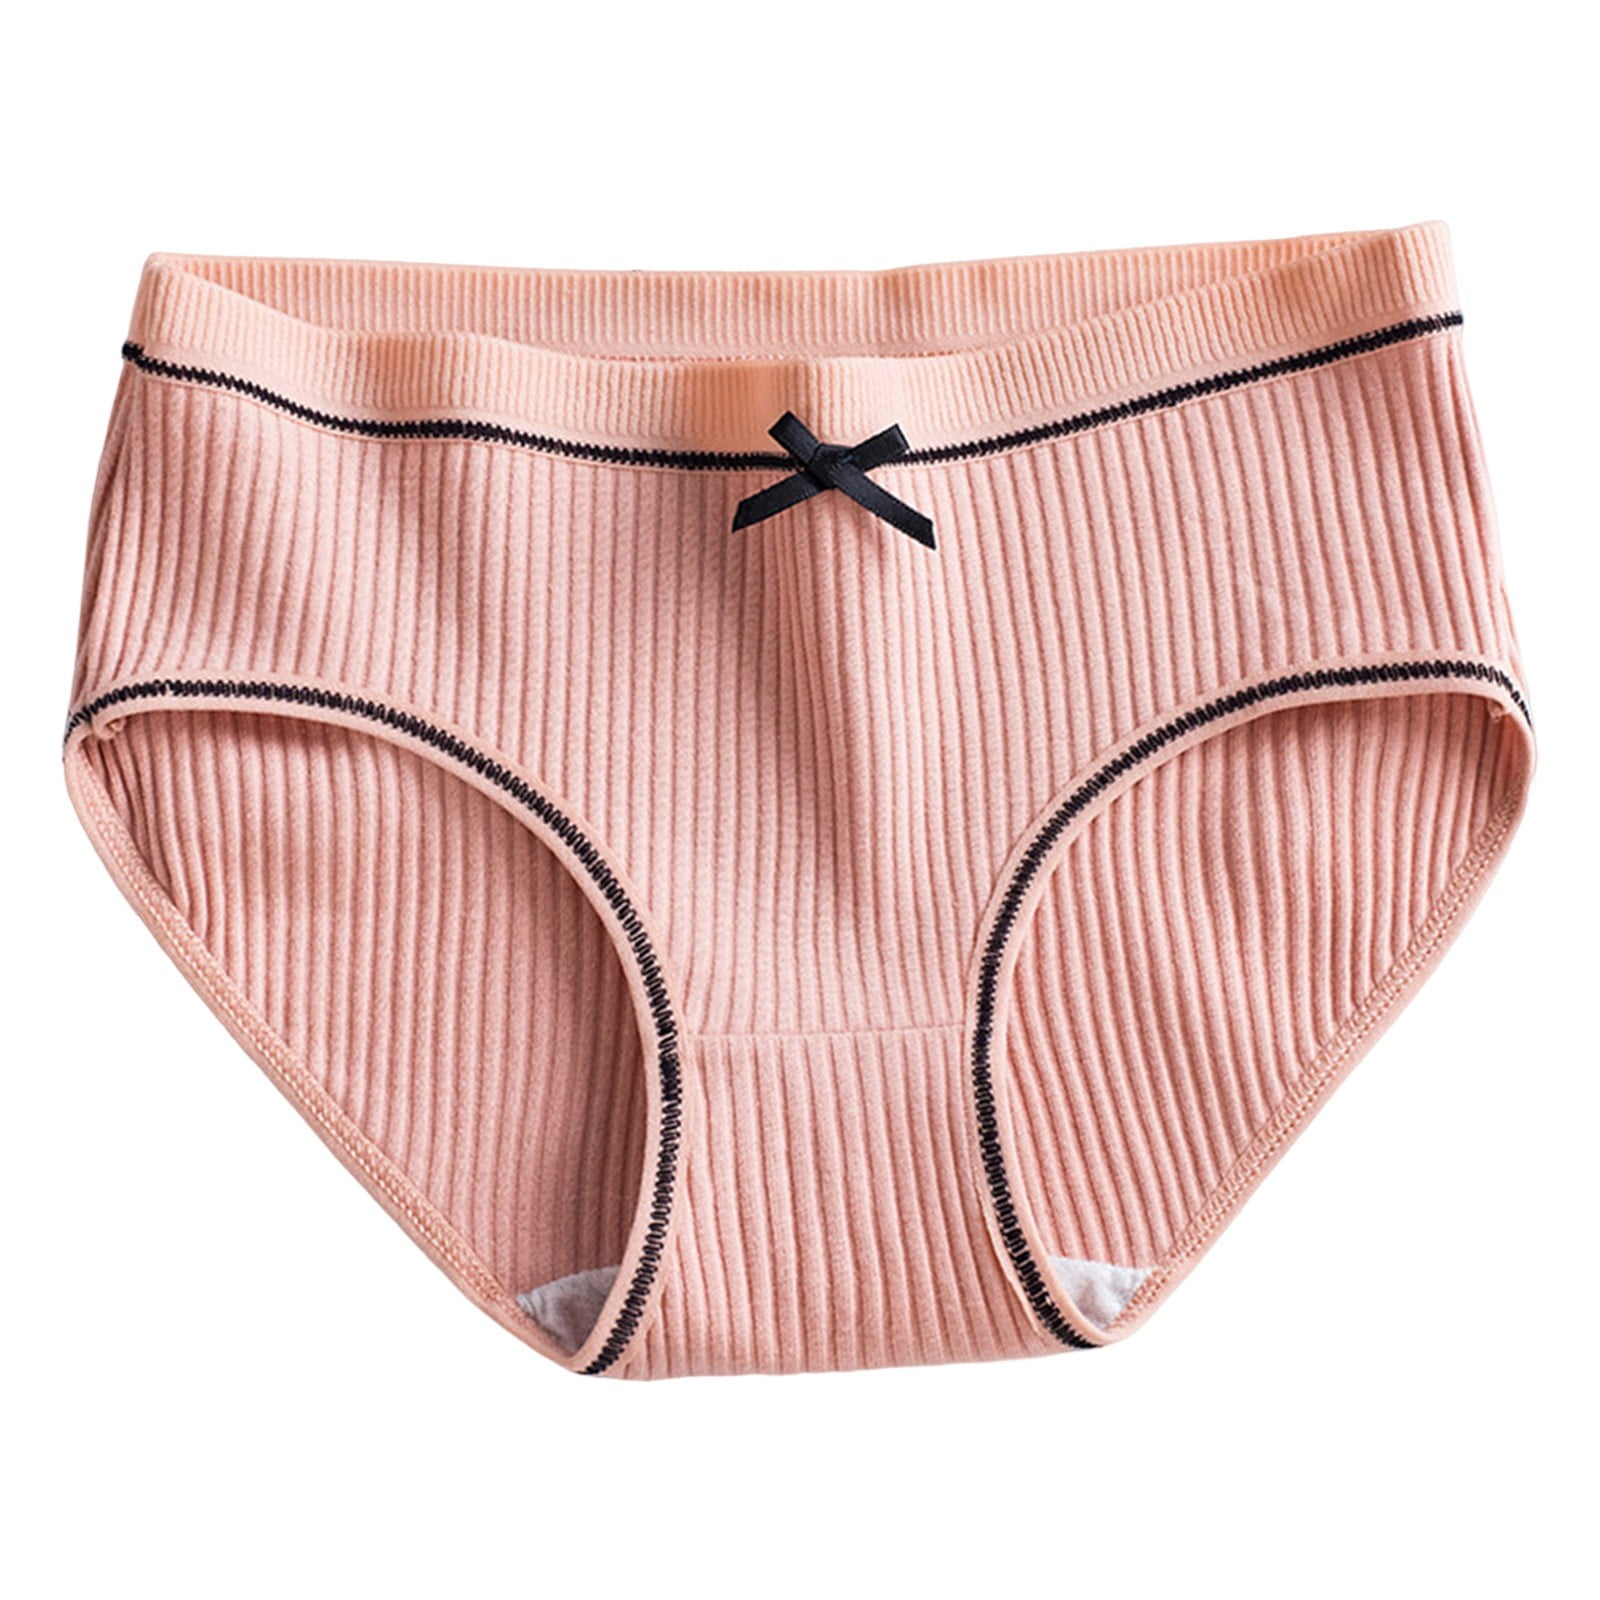 B2BODY Women's Underwear Microfiber Silicone Edge Hipster Panties